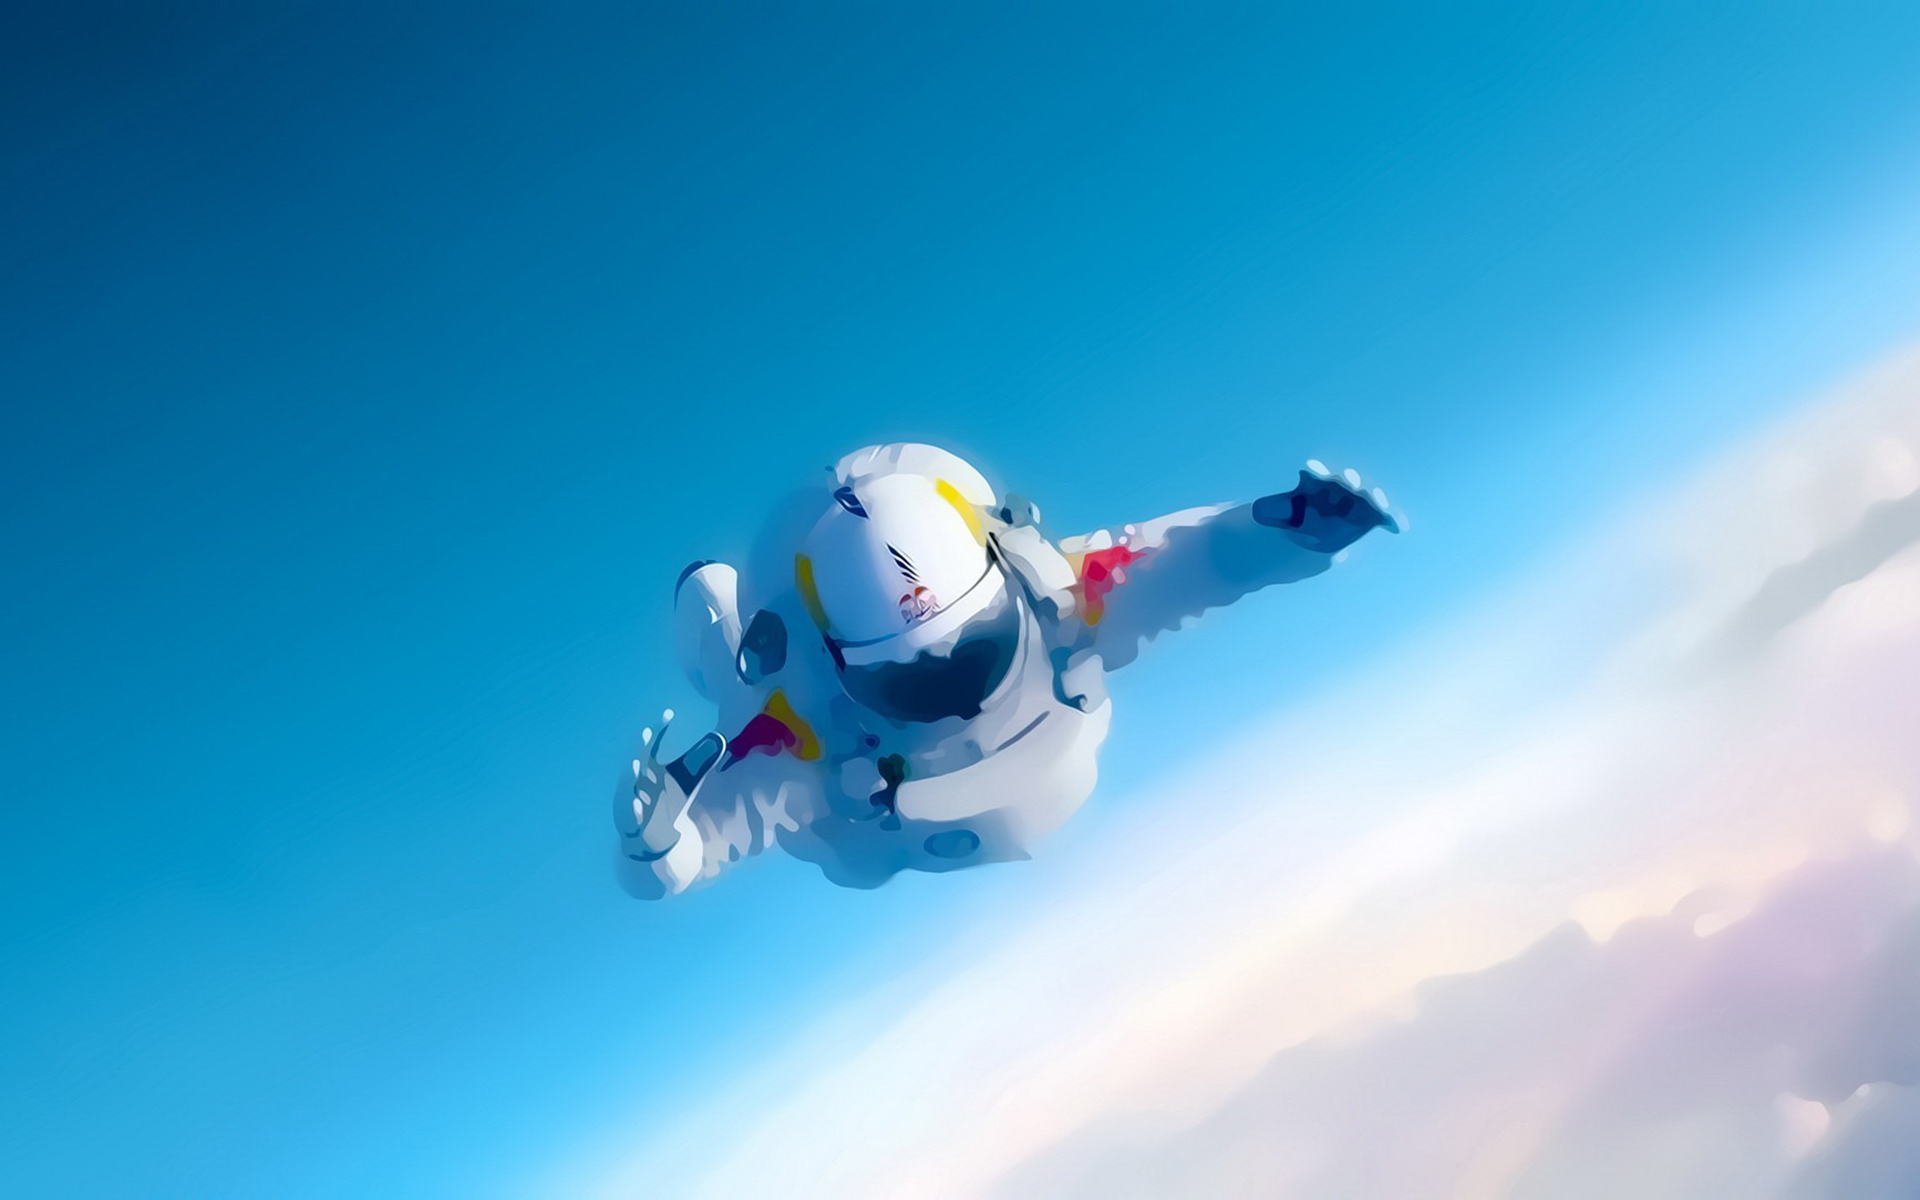 skydiving, artistic, redbulls fly, astronaut, red bull, sky